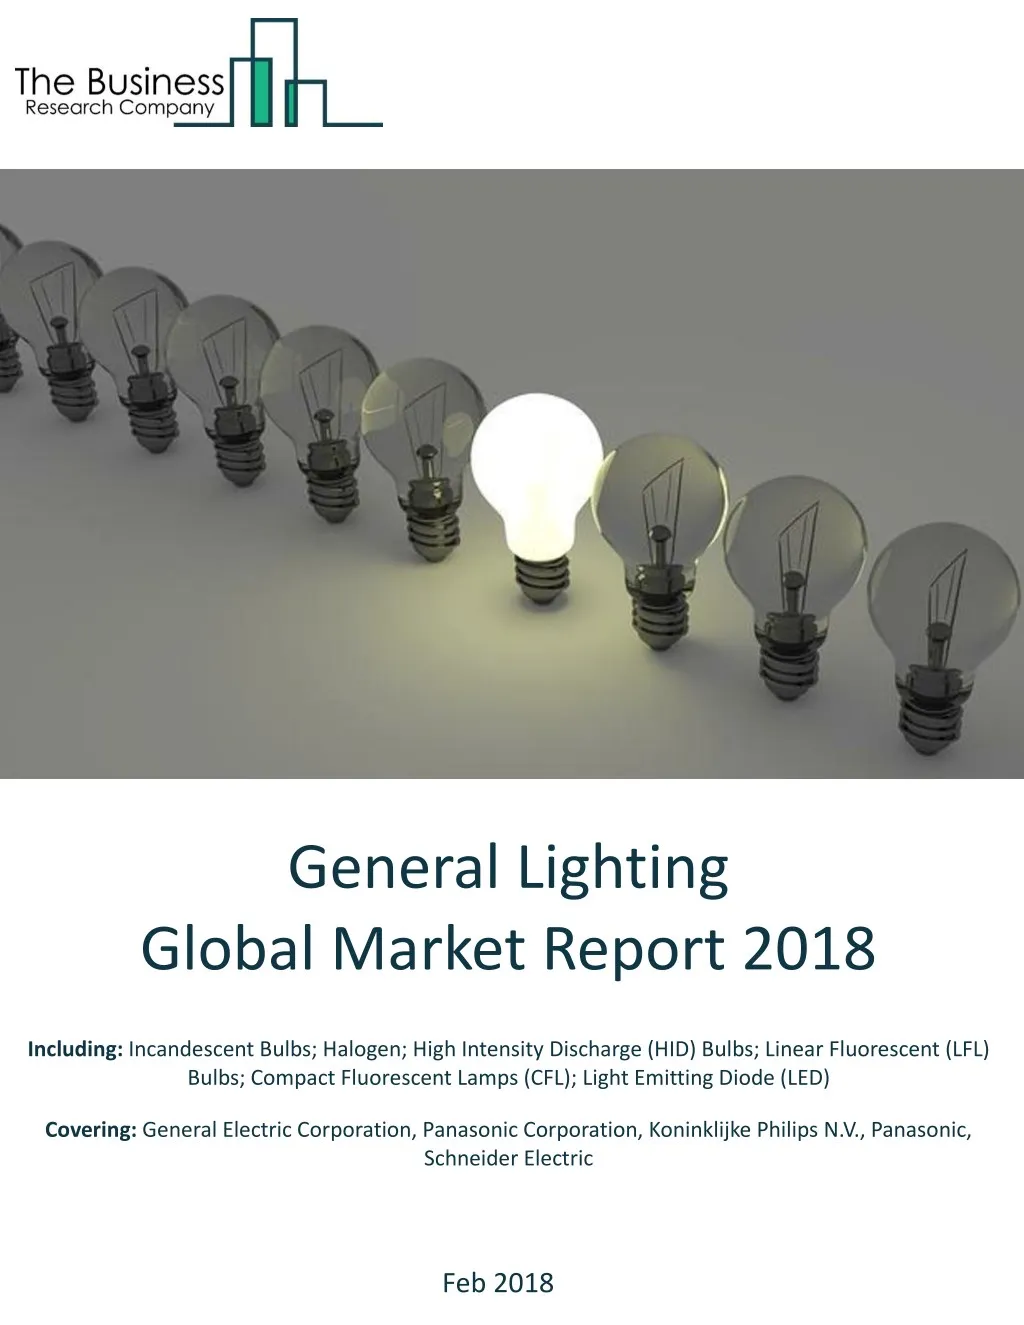 general lighting global market report 2018